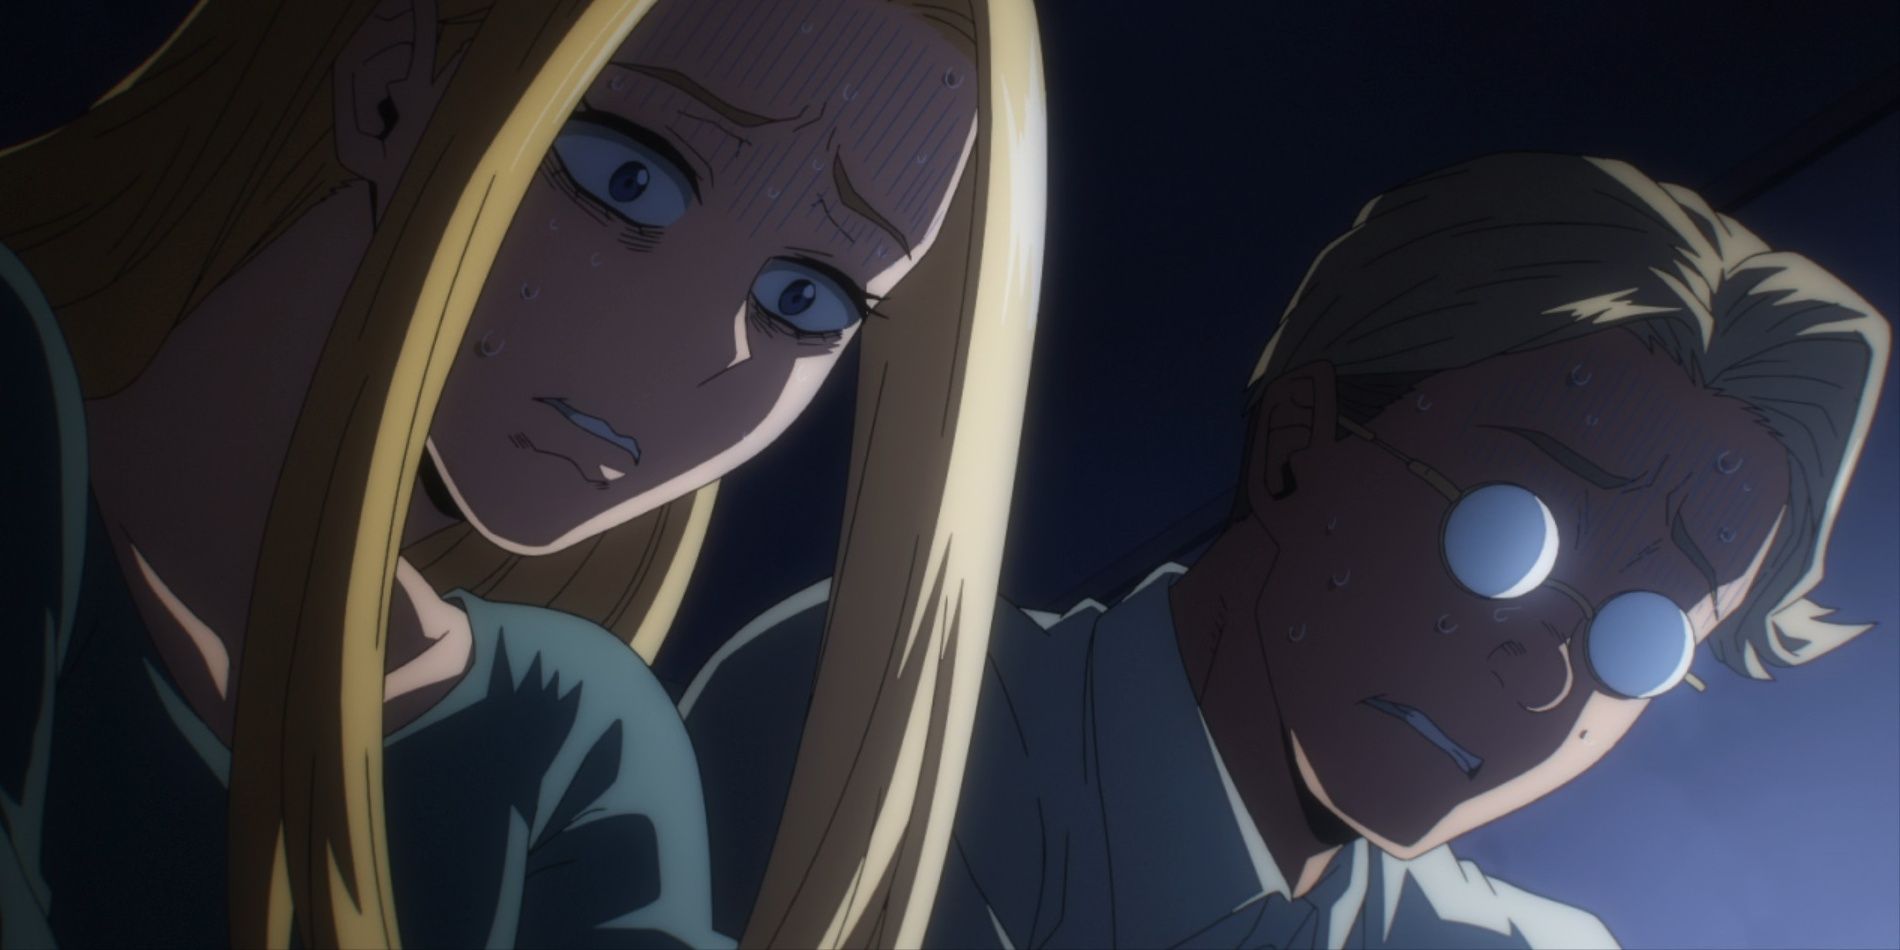 Yuga aoyama's parents look down in horror